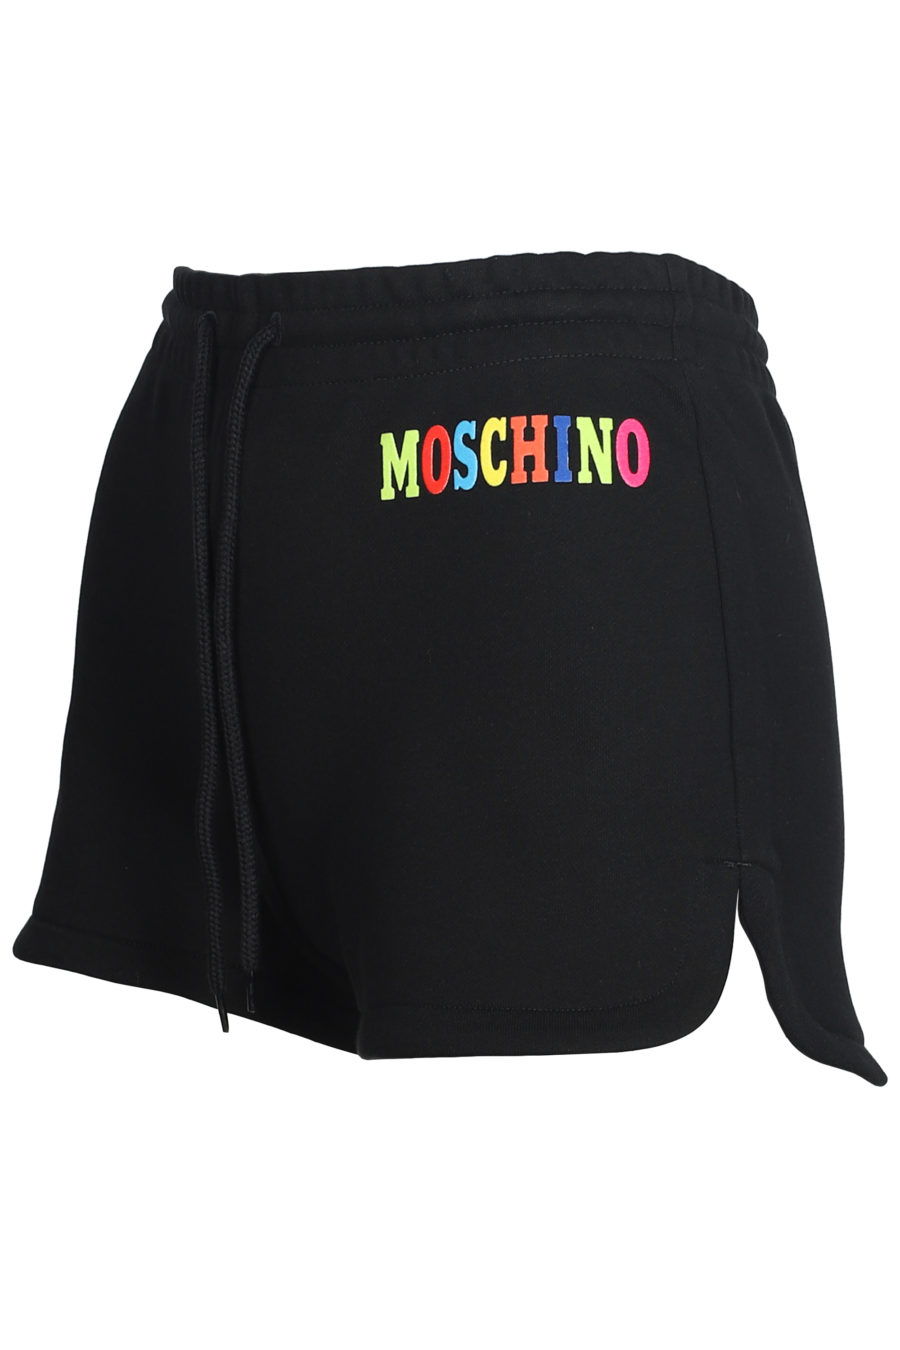 Schwarze Shorts mit farbigem Logo - IMG 5603